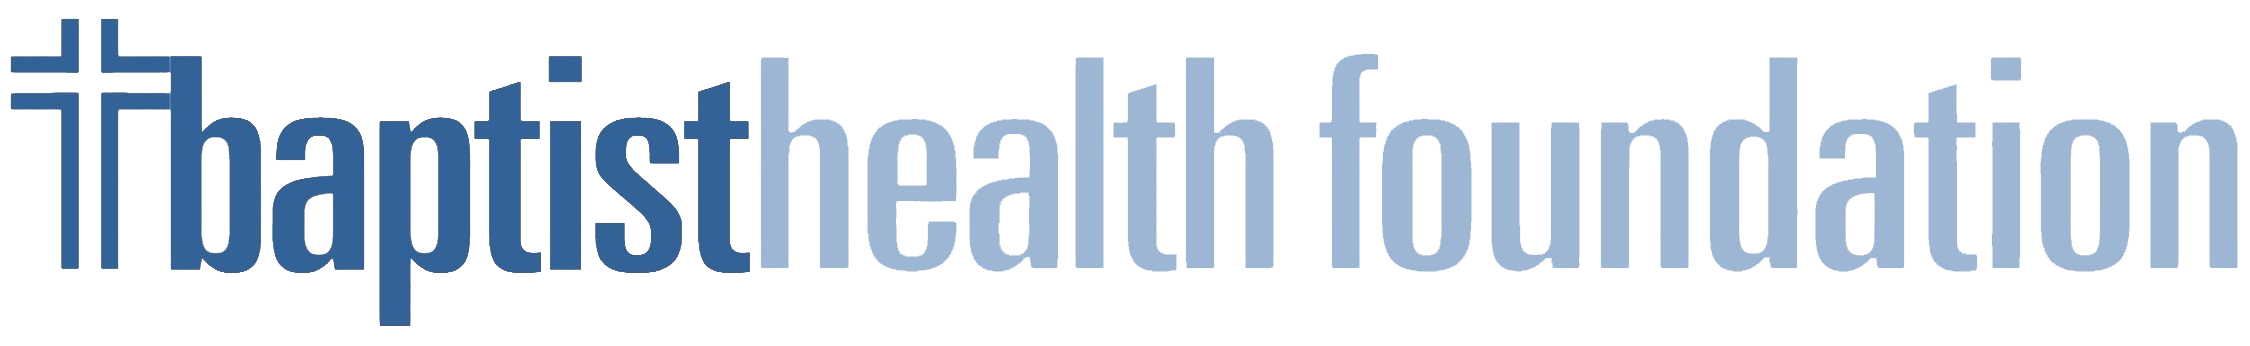 Baptist Health Foundation Logo